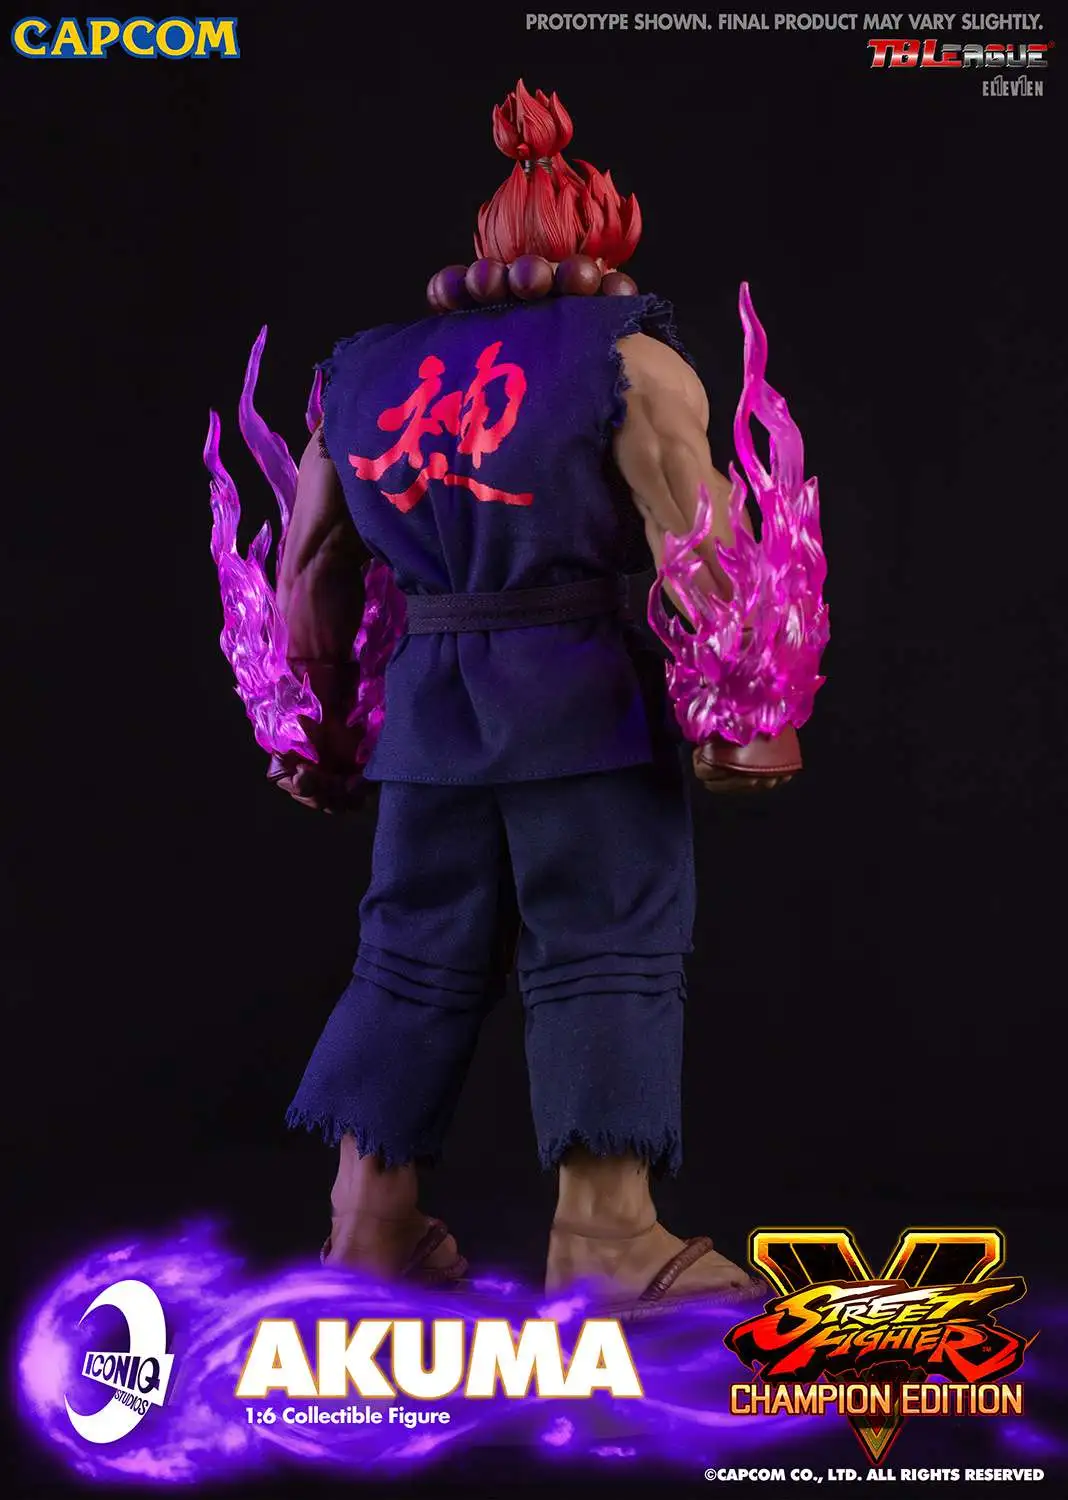 ZANGIEF Street Fighter II Action Figure para Fãs, Storm Toys, Conjunto  completo, 6 '', Em Stock, 1